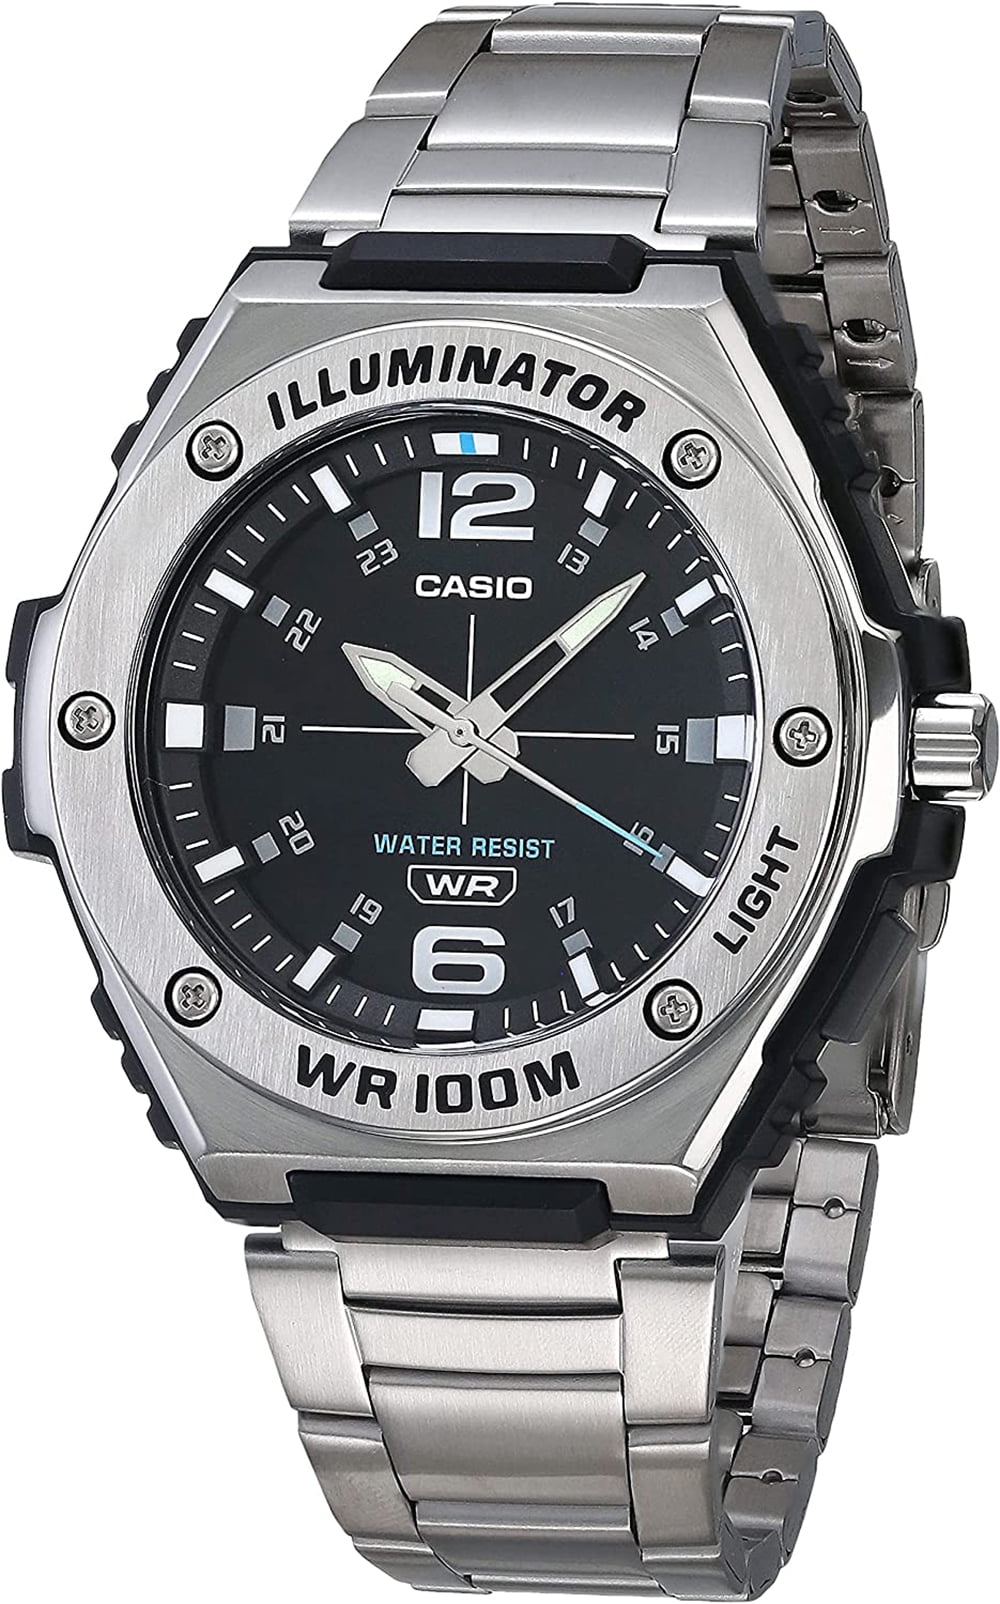 Casio Illuminator Quartz Black Dial Stainless Steel Watch MWA100HD-1AV - Walmart.com